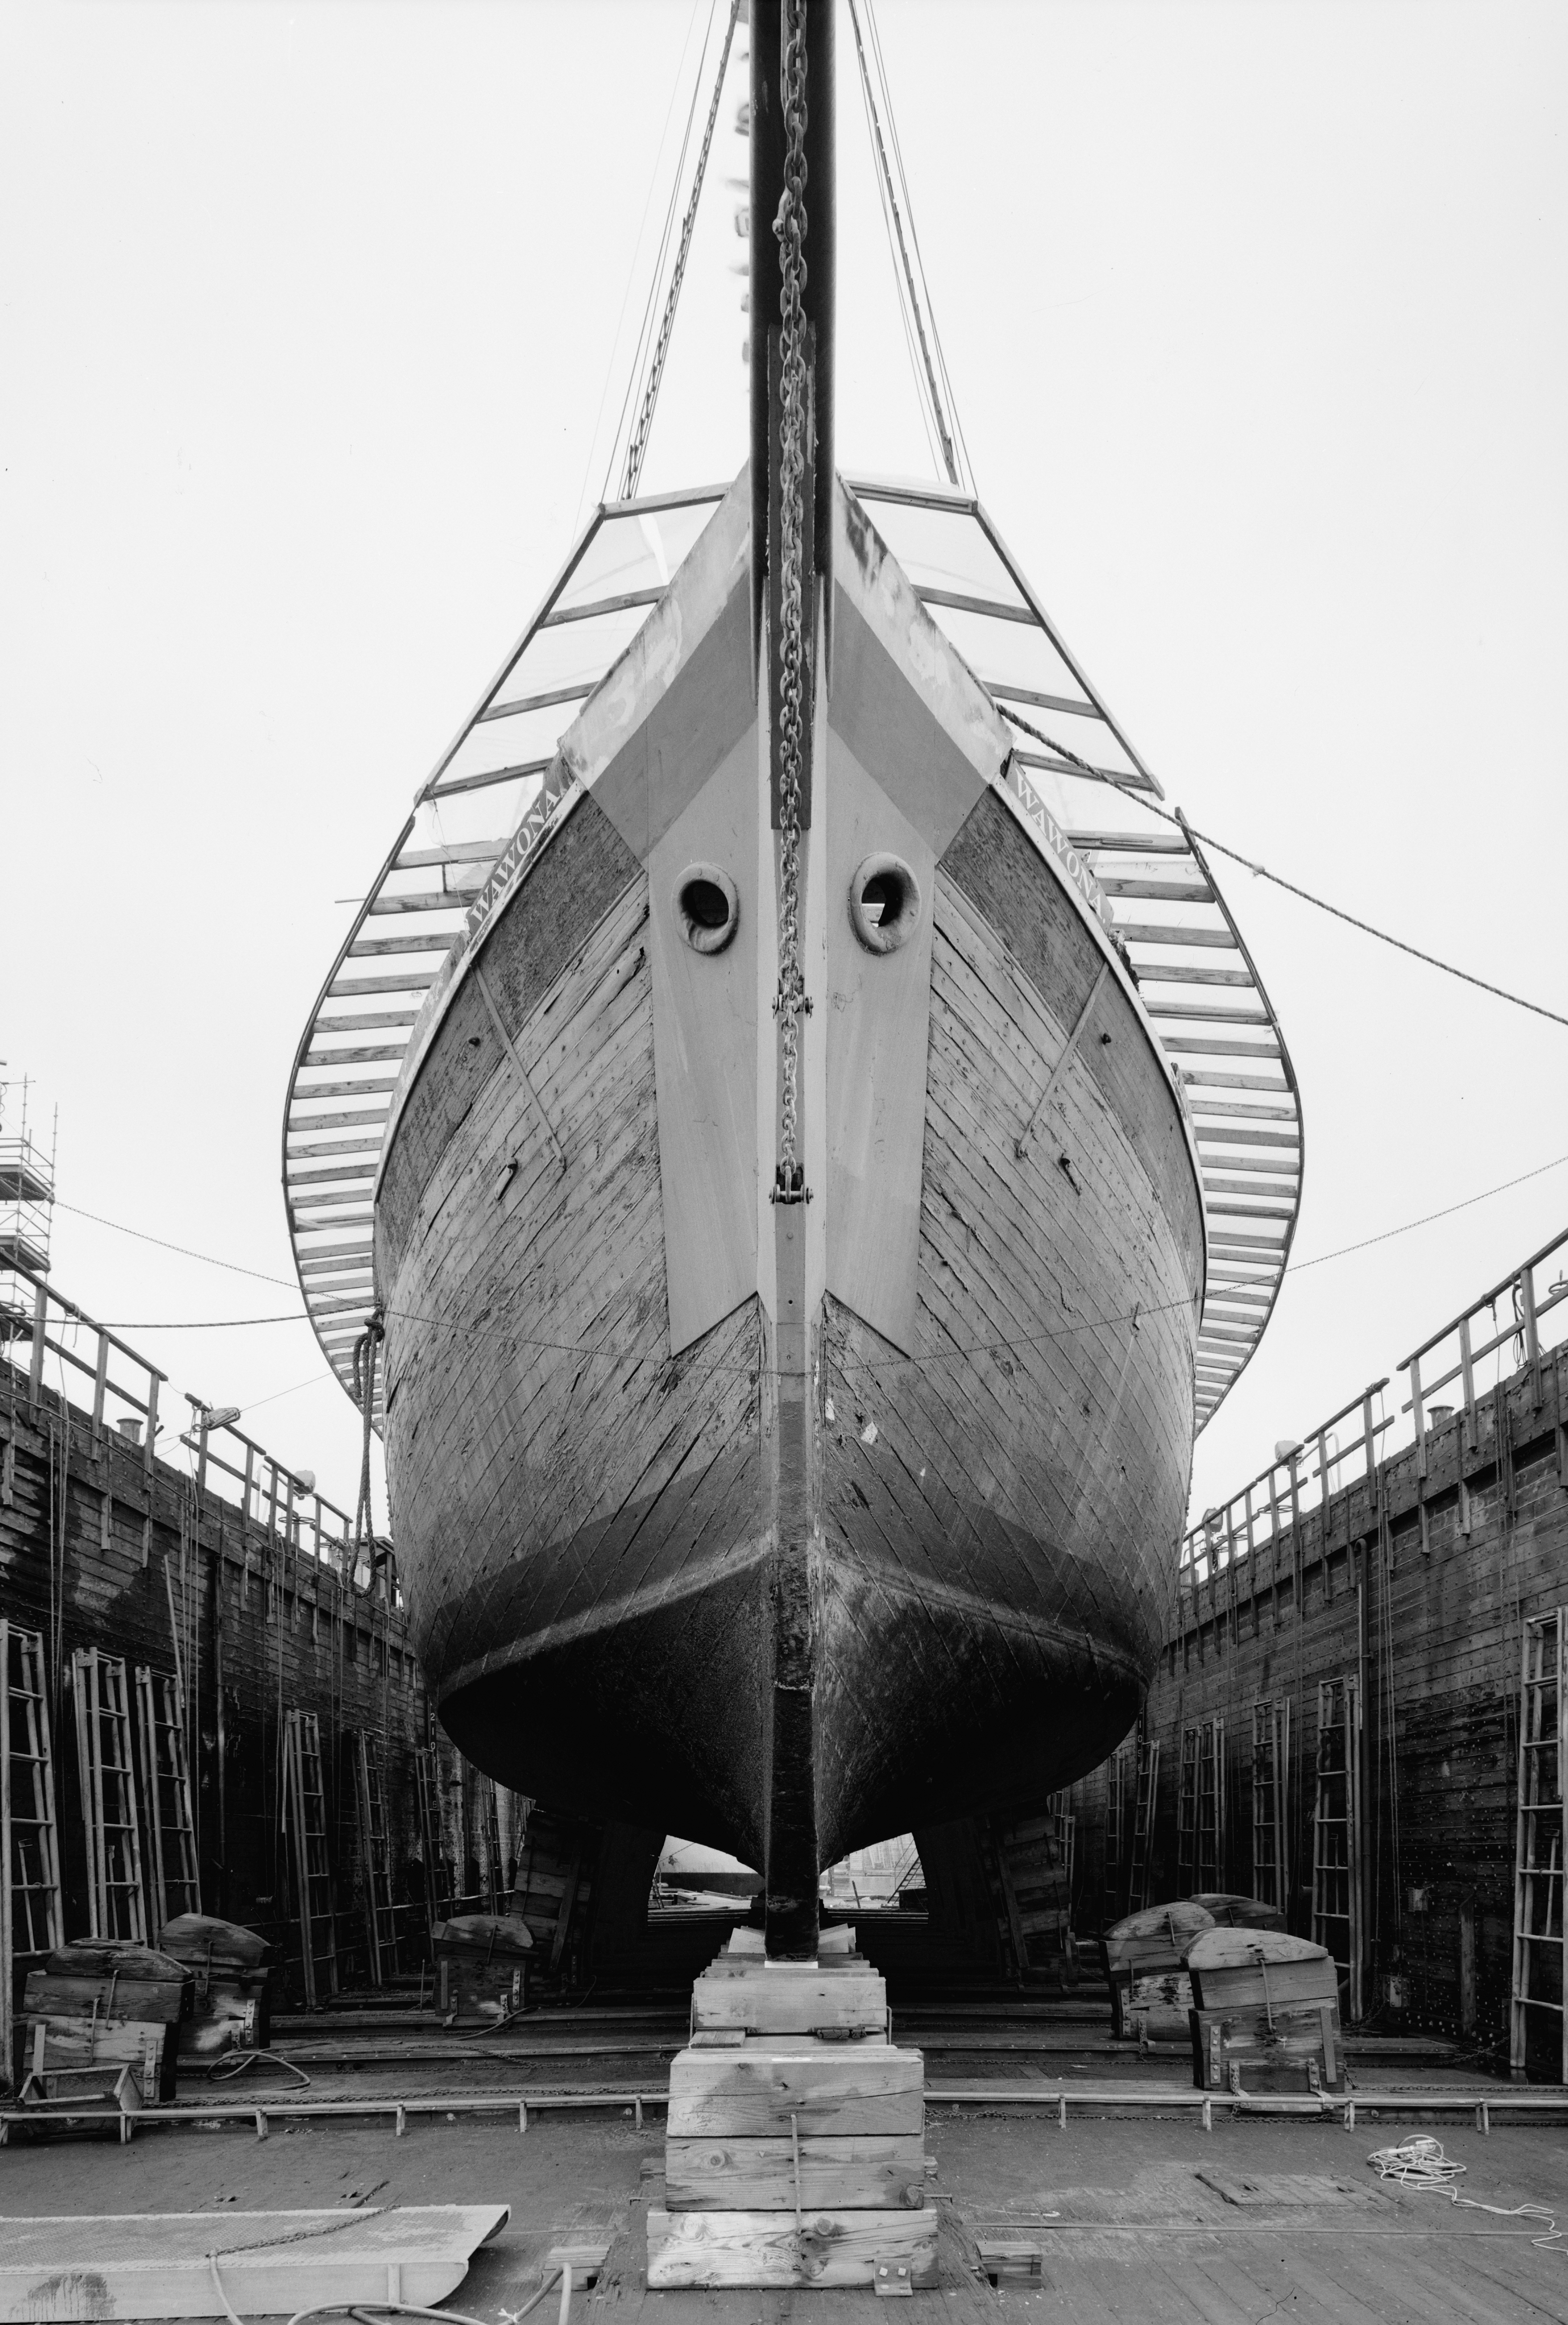 Lumber Schooner Wawona | The Model Shipwright